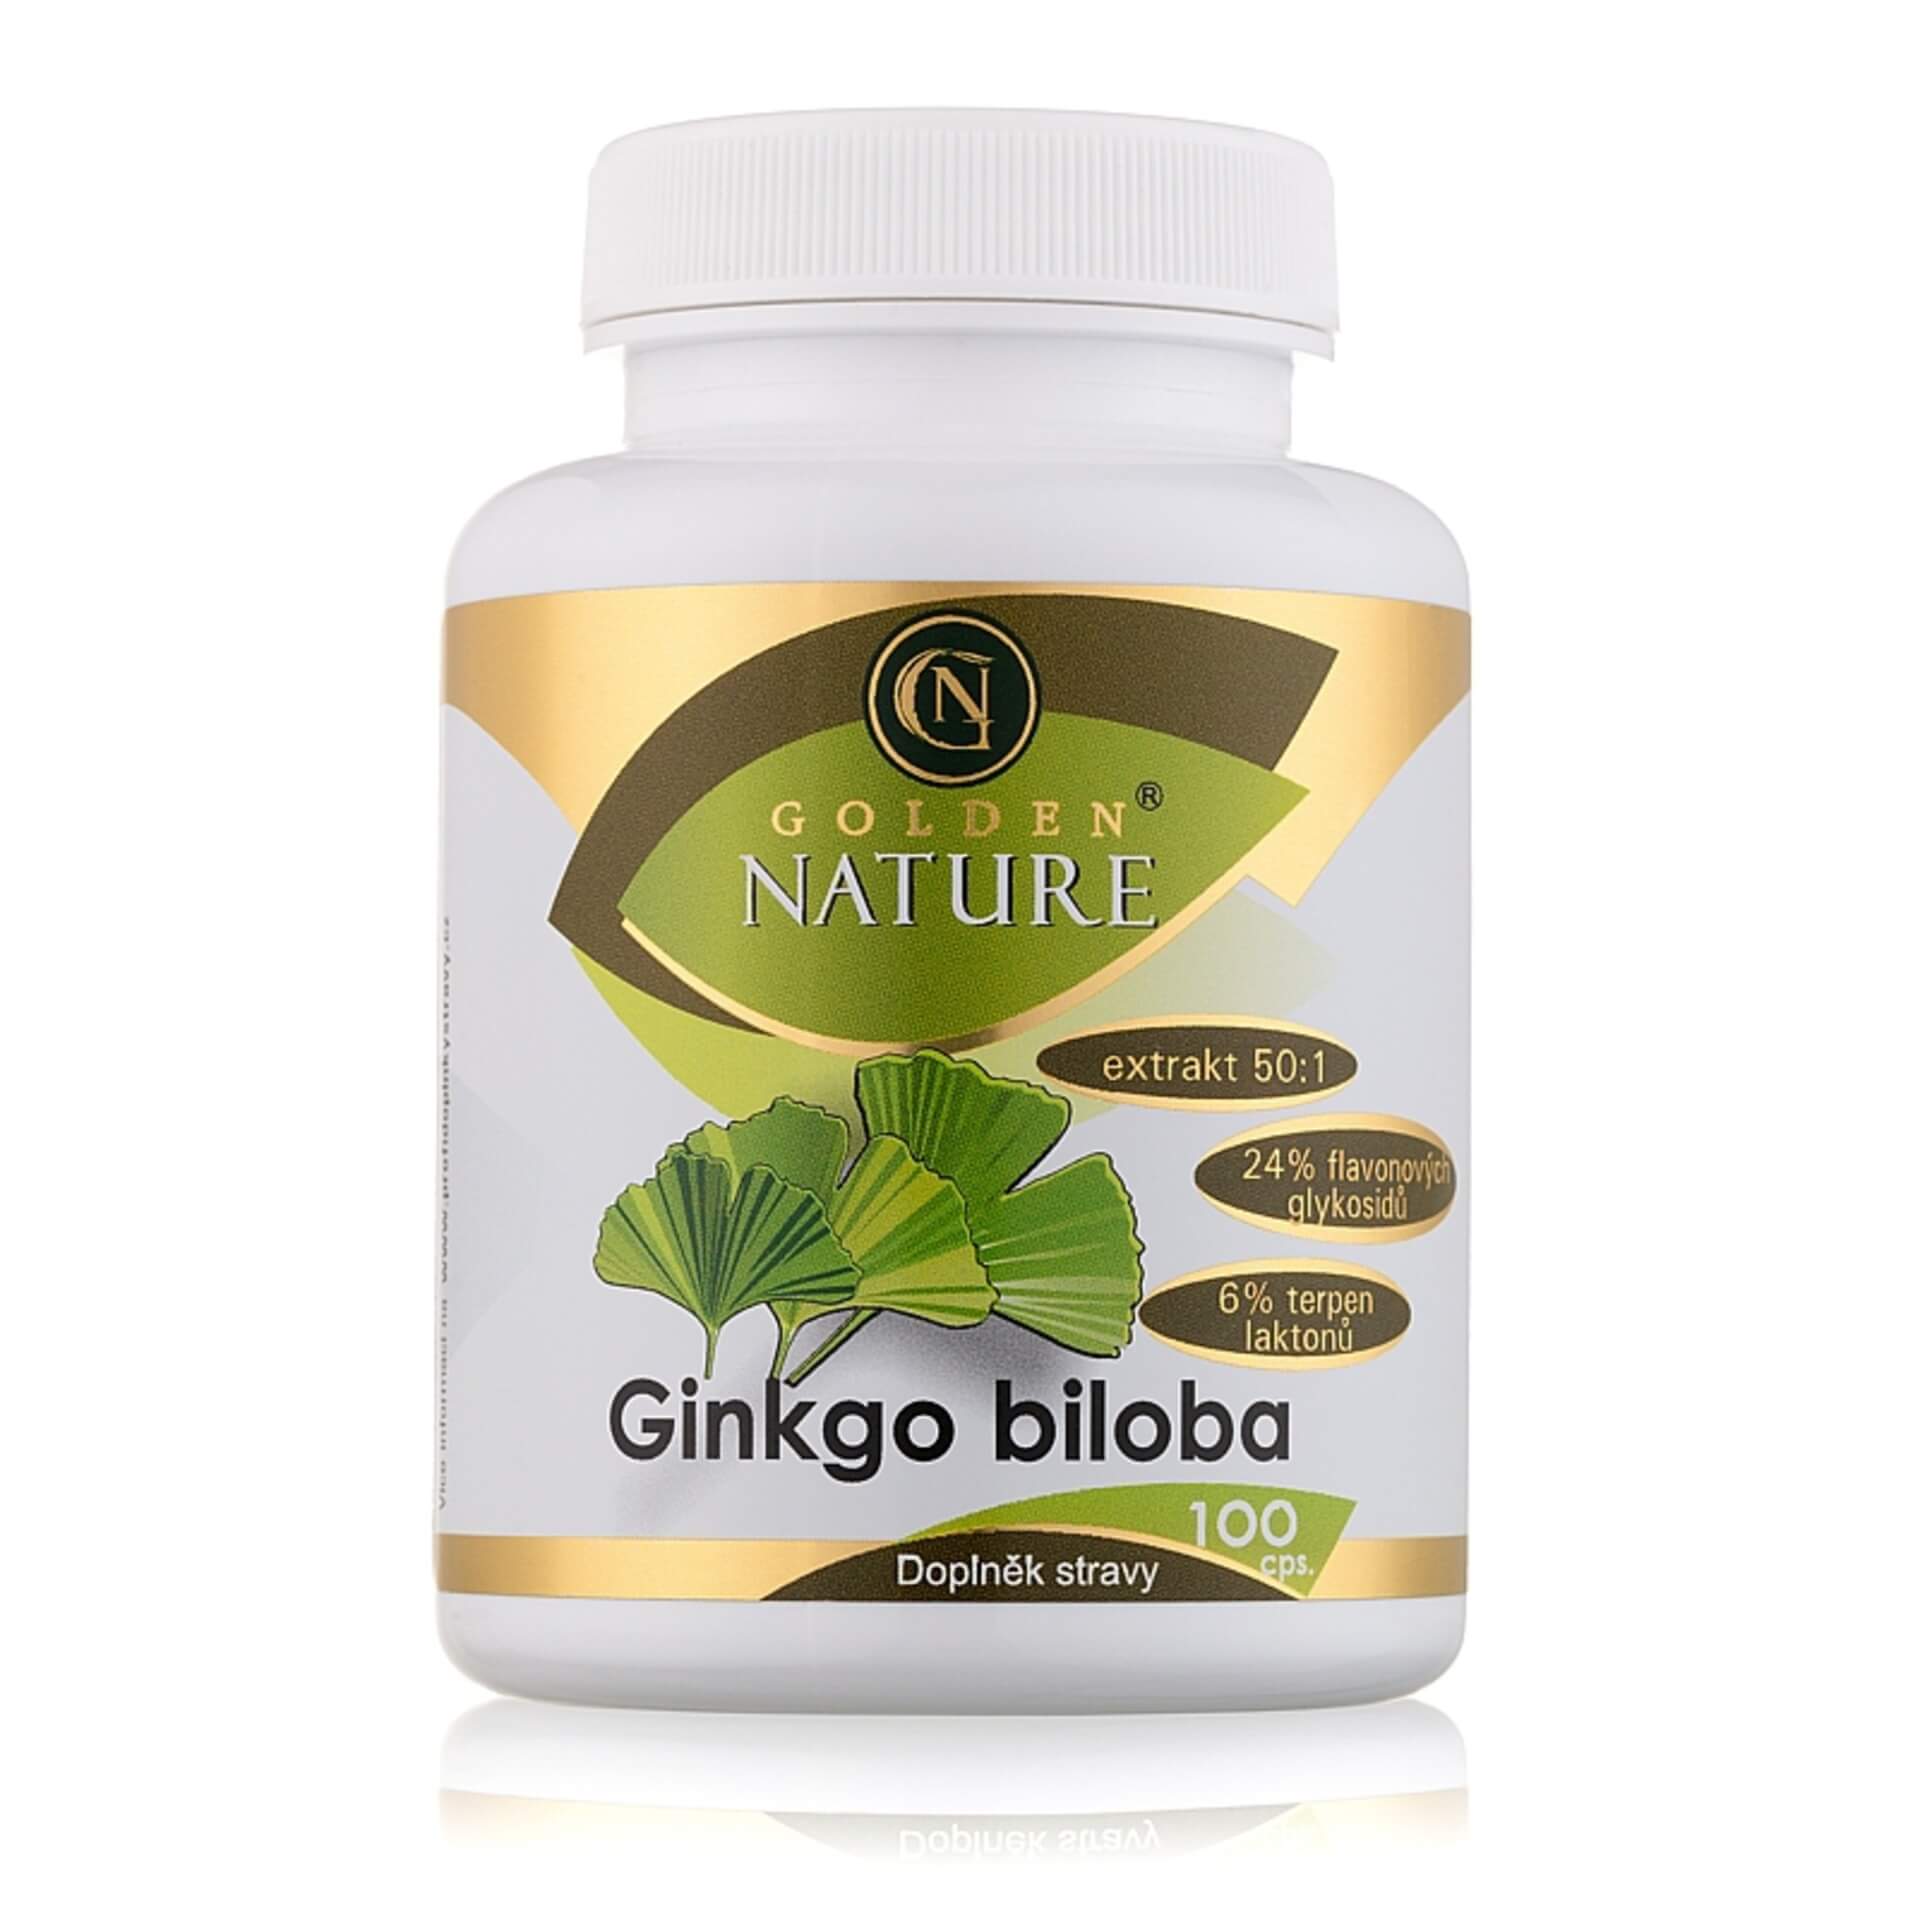 Golden Nature Ginkgo Biloba extrakt 50:1 60mg 100 tablet